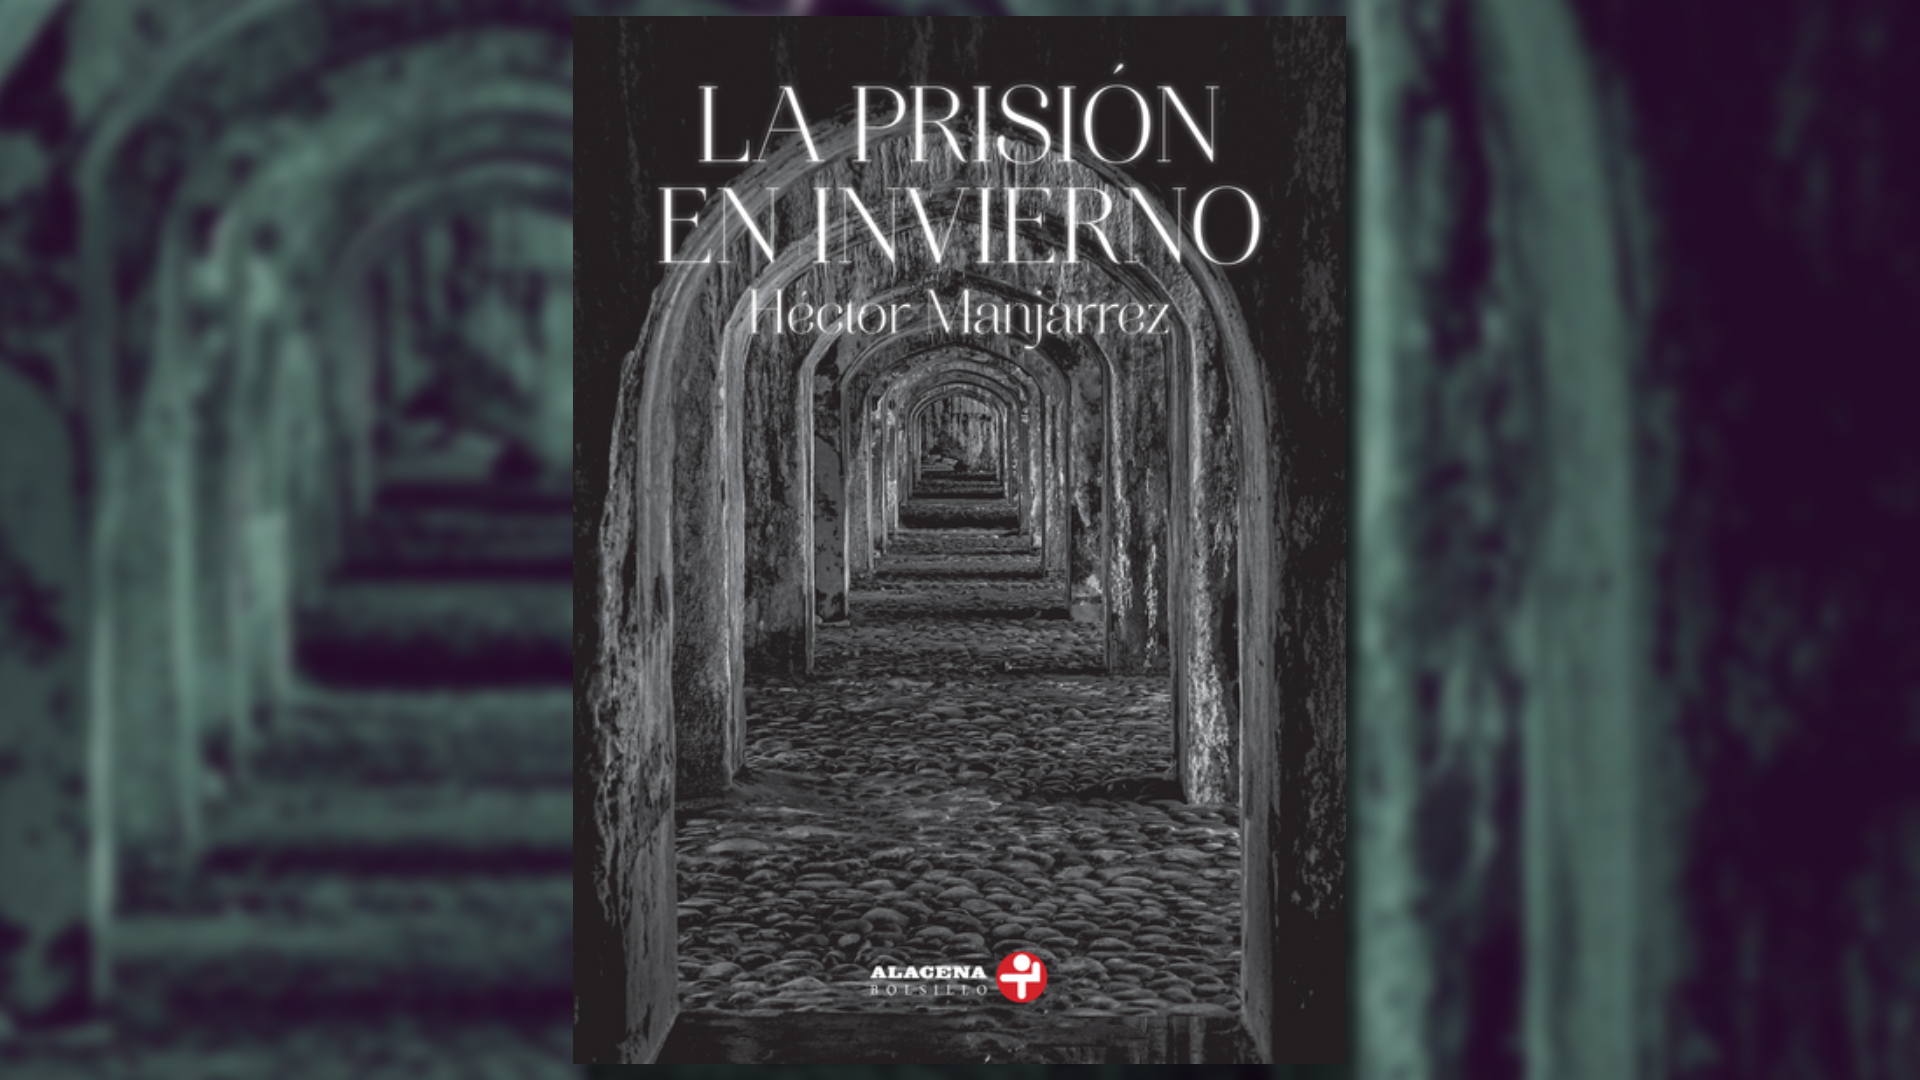  "The prison in winter" - Hector Manjarrez